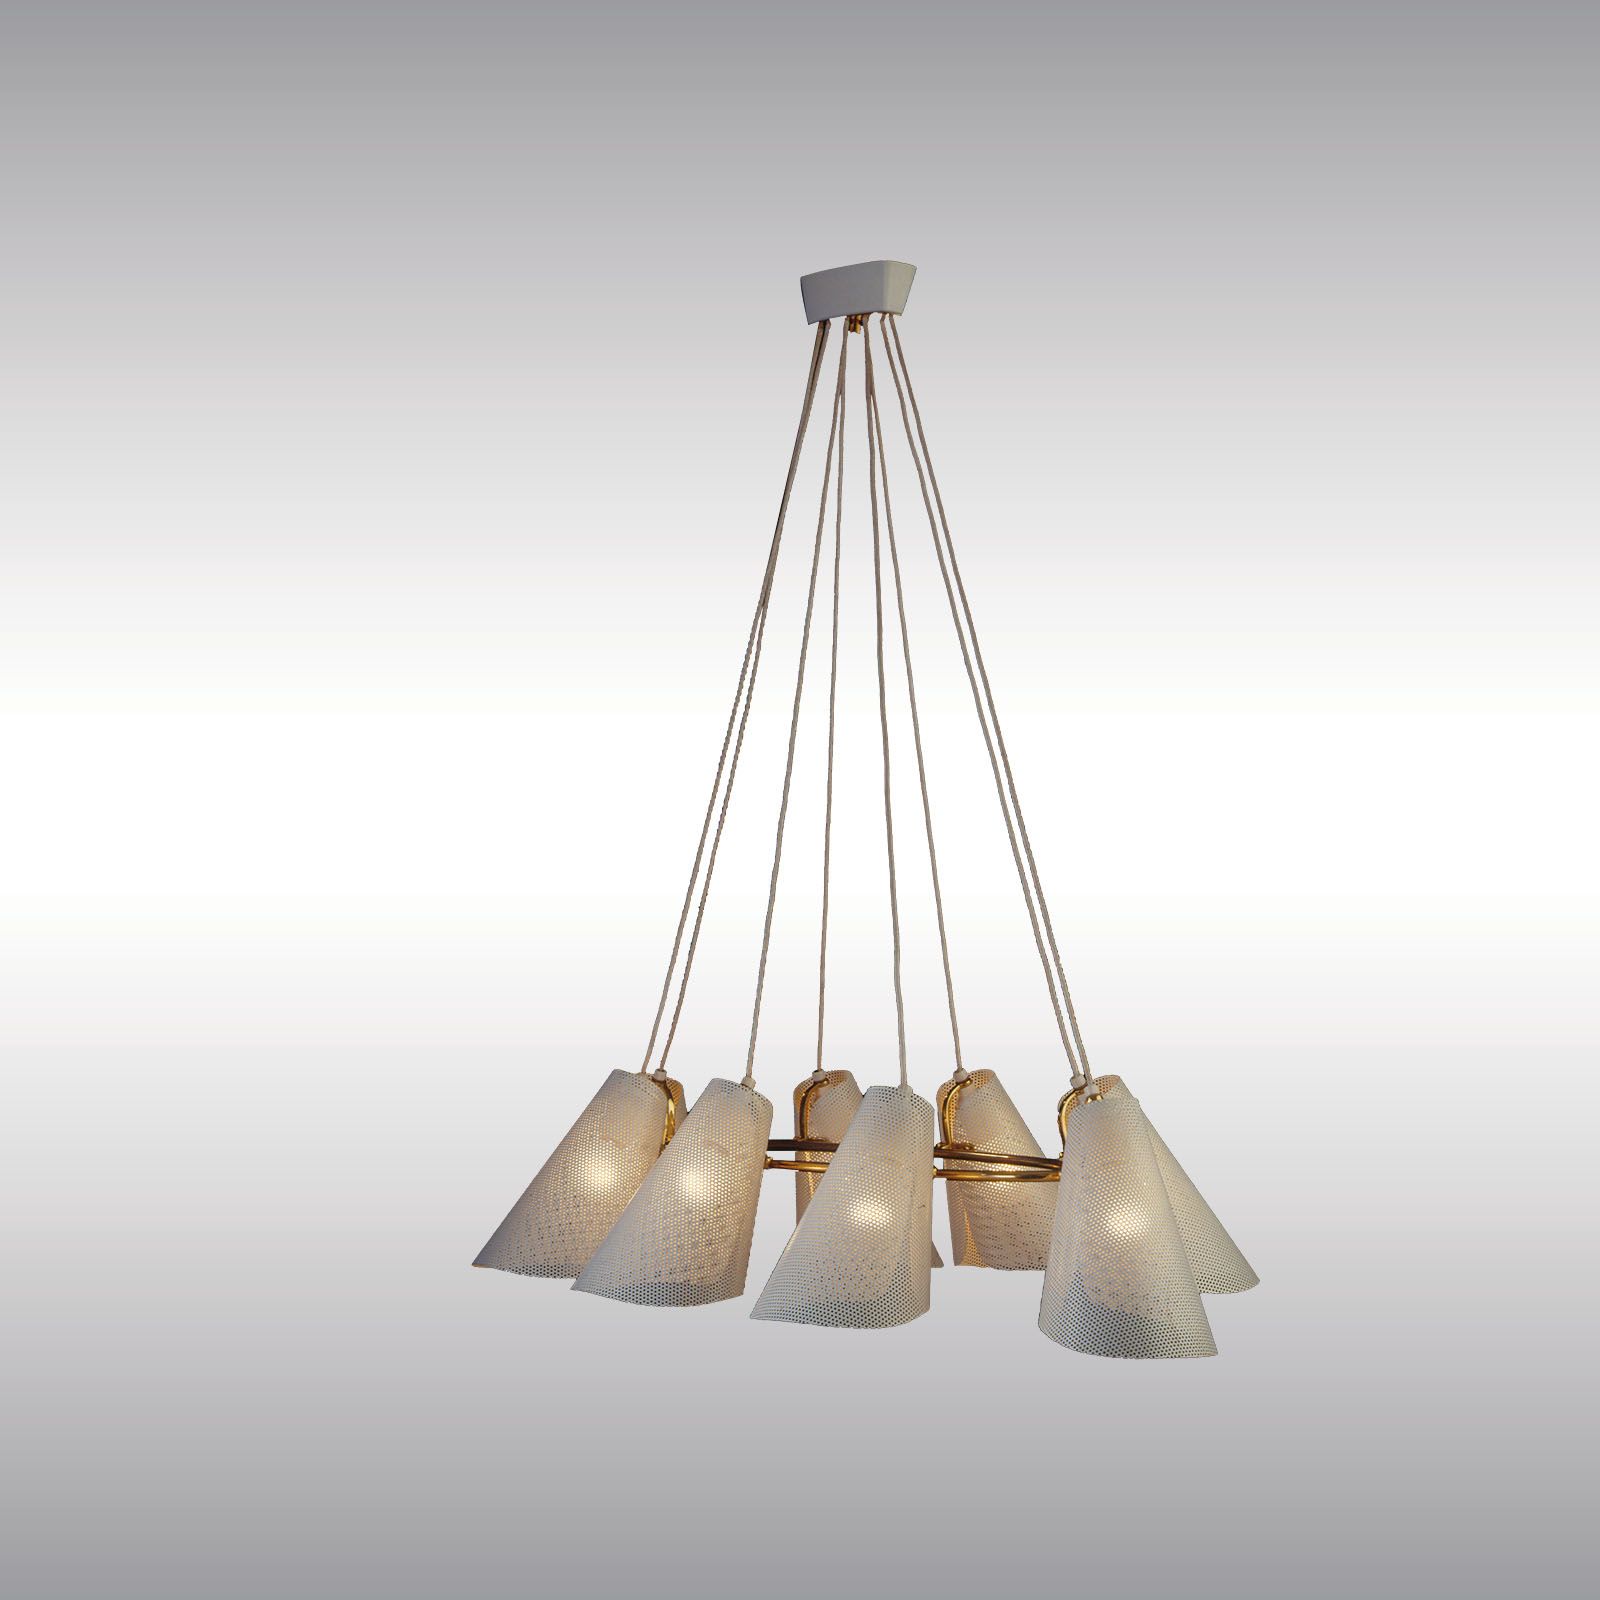 WOKA LAMPS VIENNA - OrderNr.: 9741|DINERS - Design: WOKA